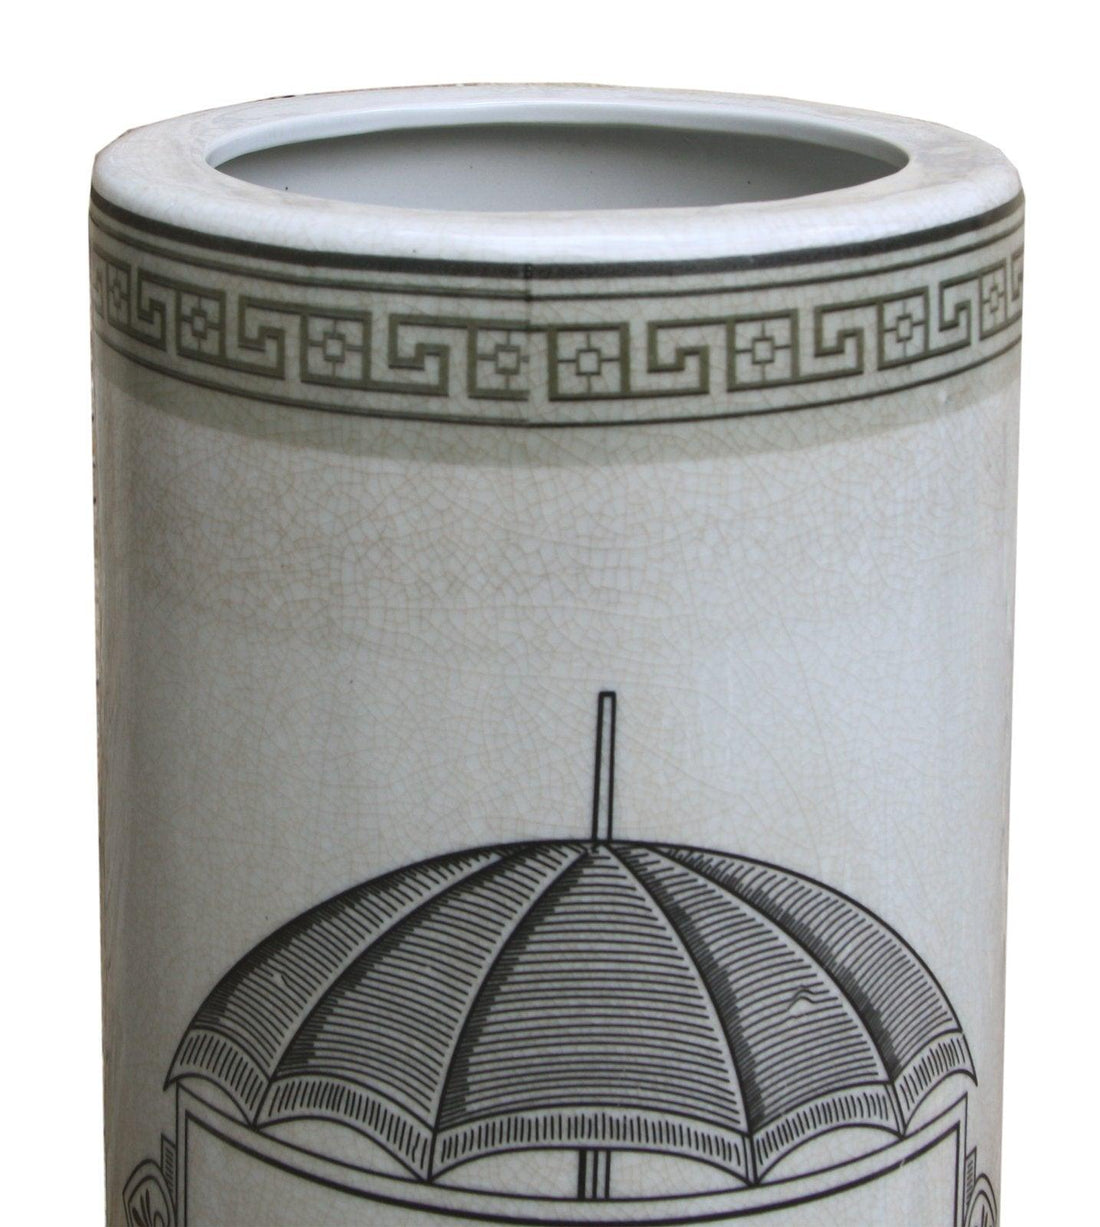 Ceramic Umbrella Stand, Monochrome Umbrella Print - £70.99 - 